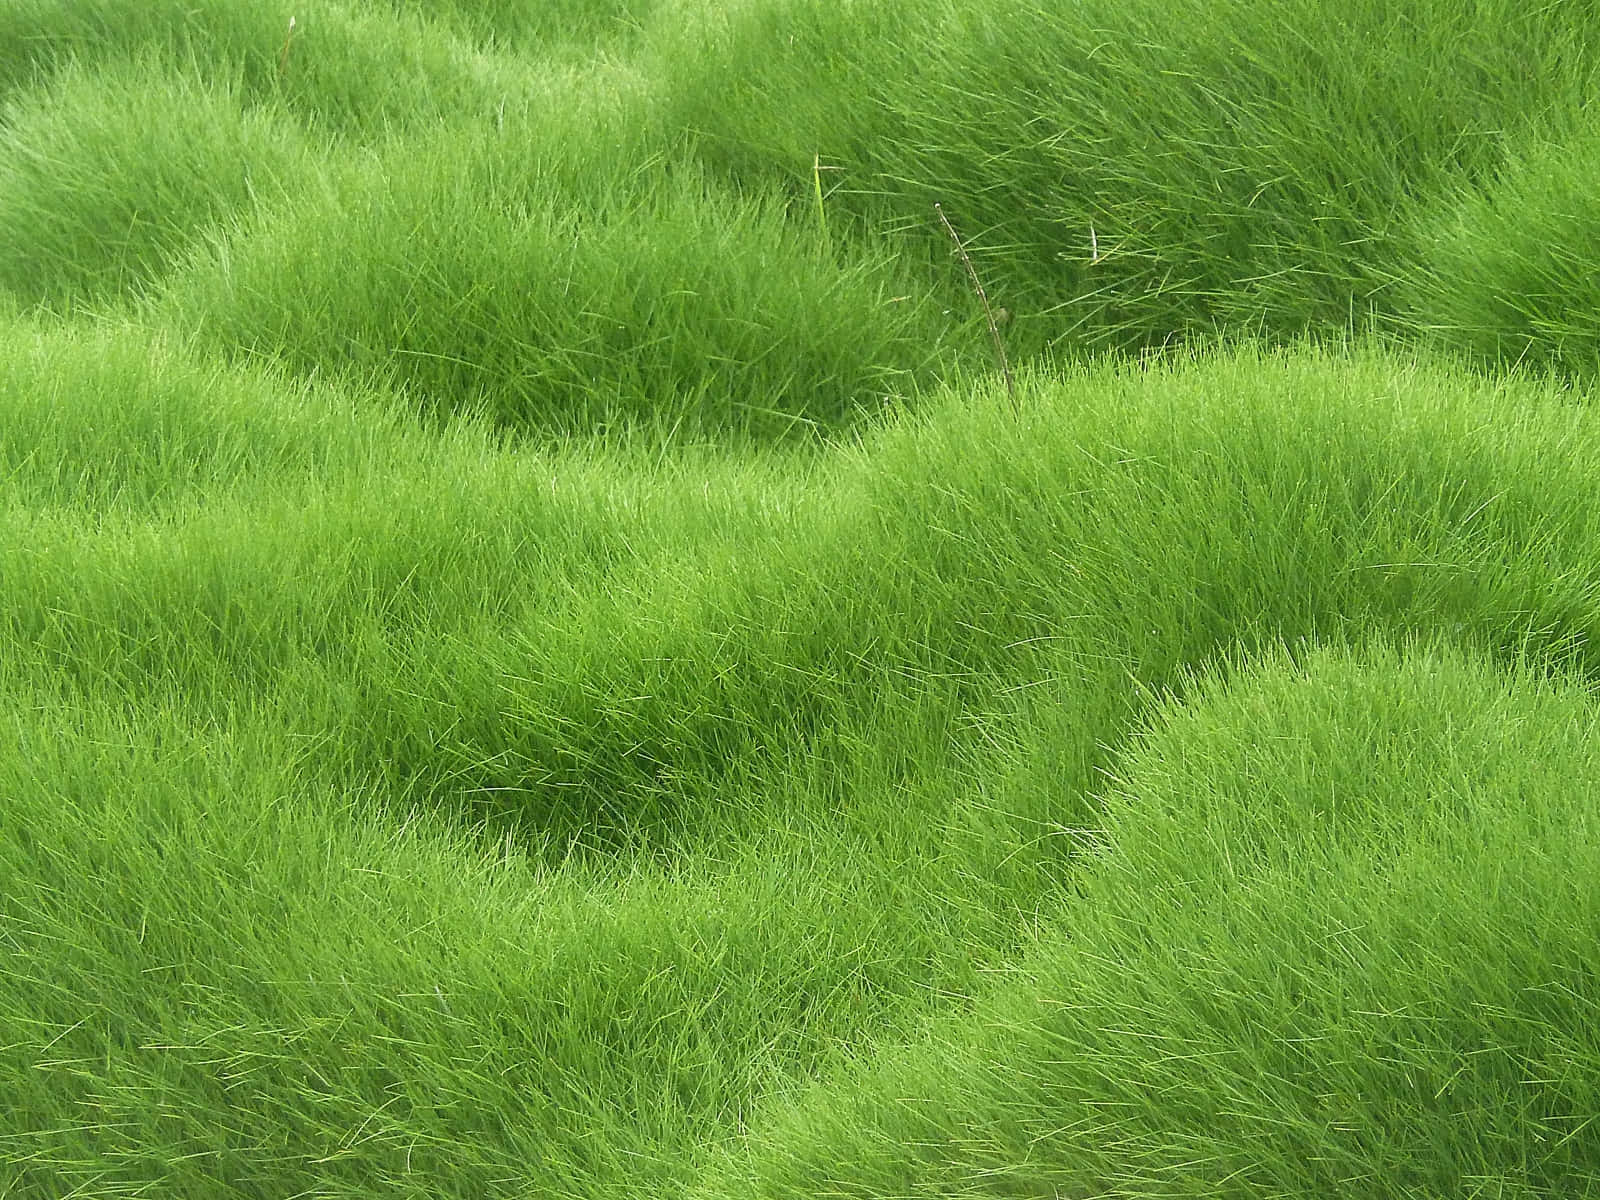 Vibrant Green Grass Field